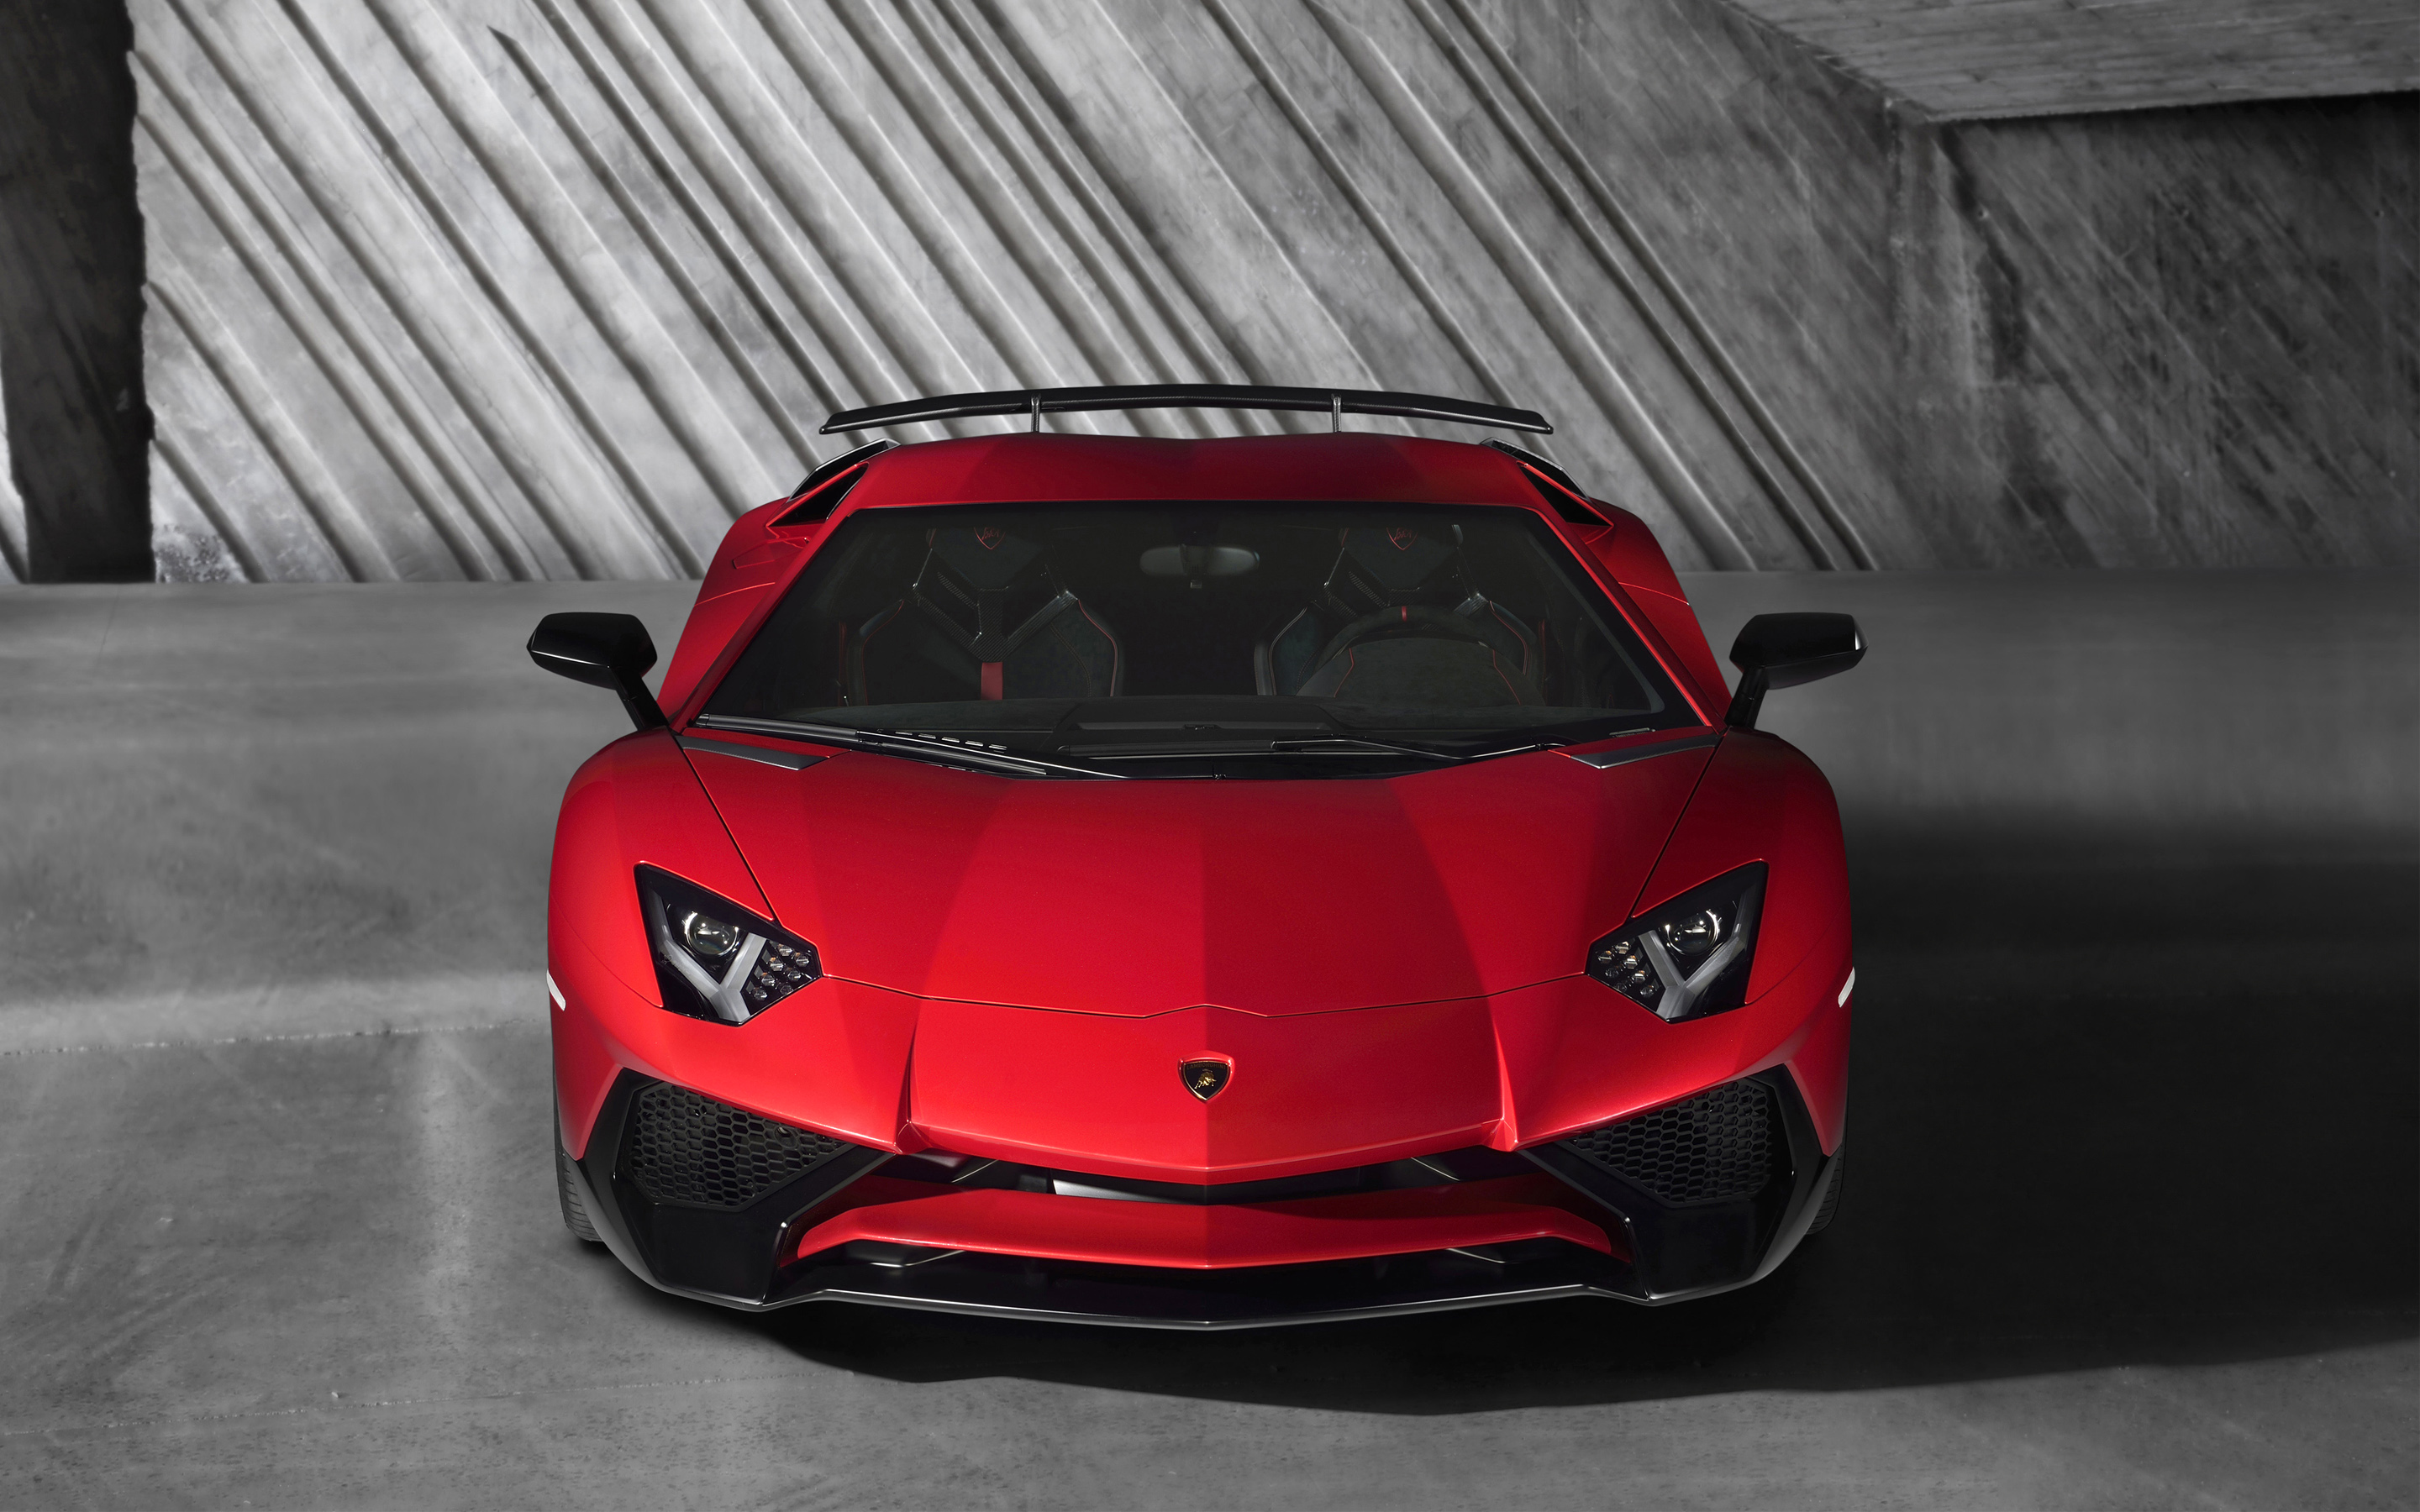 Laden Sie das Lamborghini, Fahrzeuge, Lamborghini Aventador Sv-Bild kostenlos auf Ihren PC-Desktop herunter